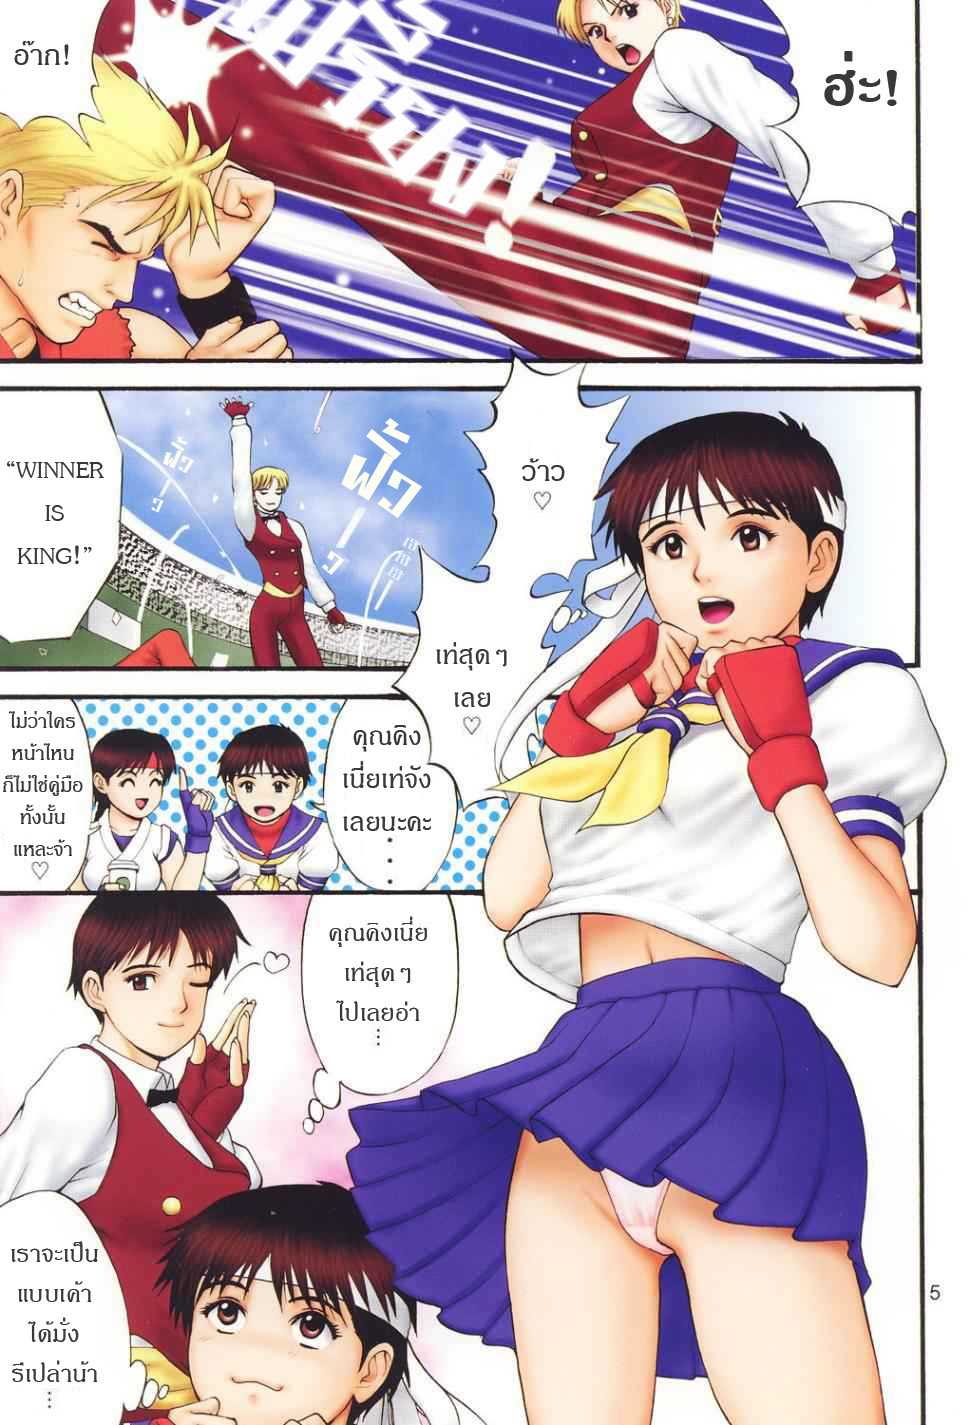 [Saigado] ยูริและพ้องเพื่อน ฟูลคัลเลอร์ 4 [The Yuri &amp; Friends Full Color 4 ~ Sakura vs. Yuri Edition] &lt;Thai Translated&gt; 